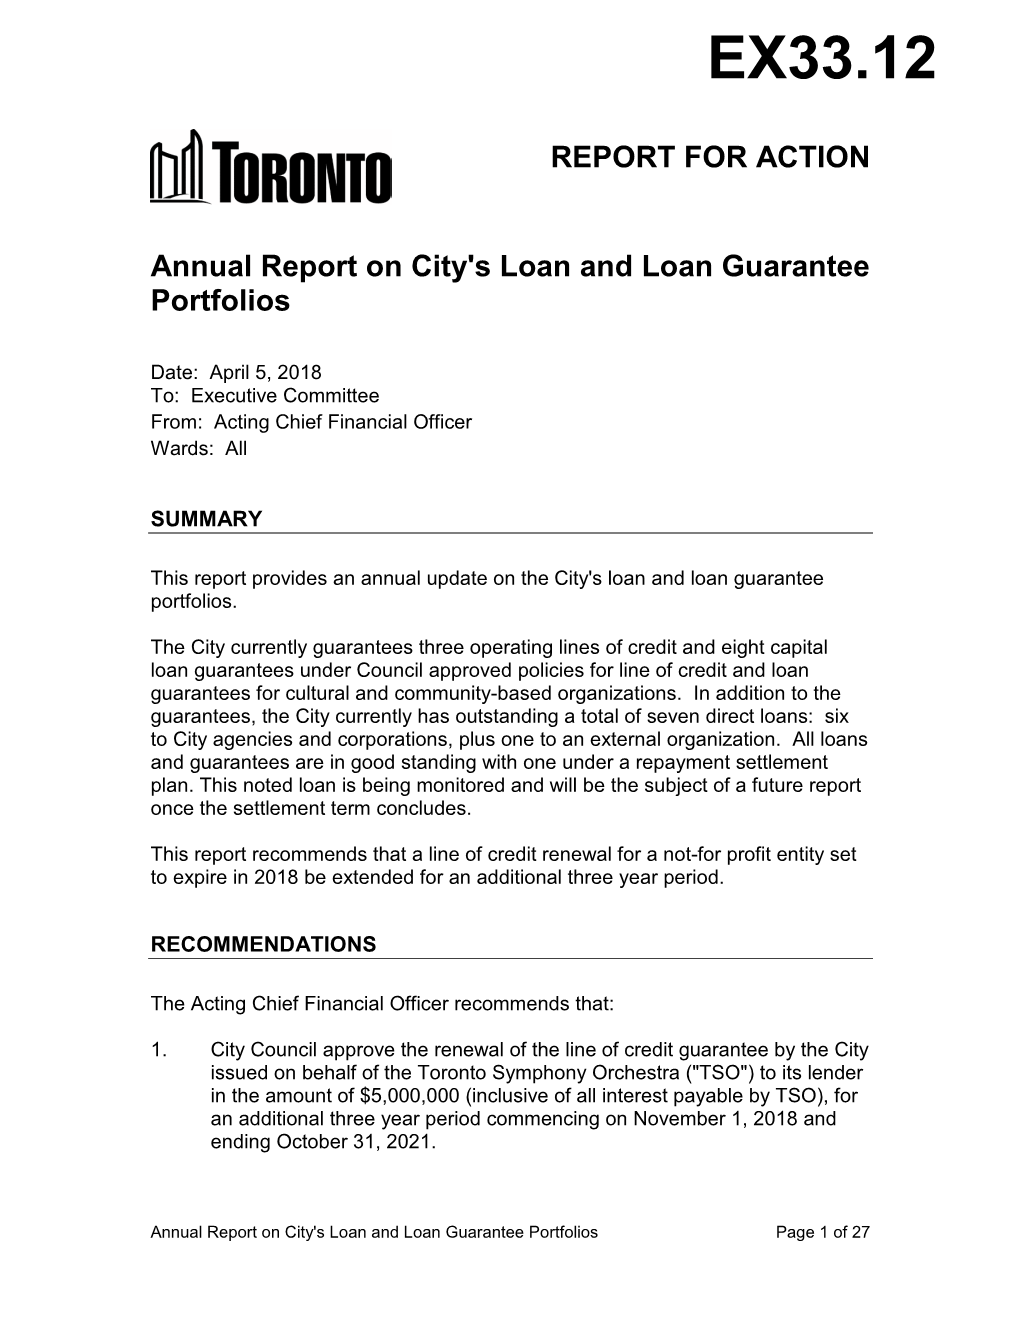 Annual Report on City's Loan and Loan Guarantee Portfolios